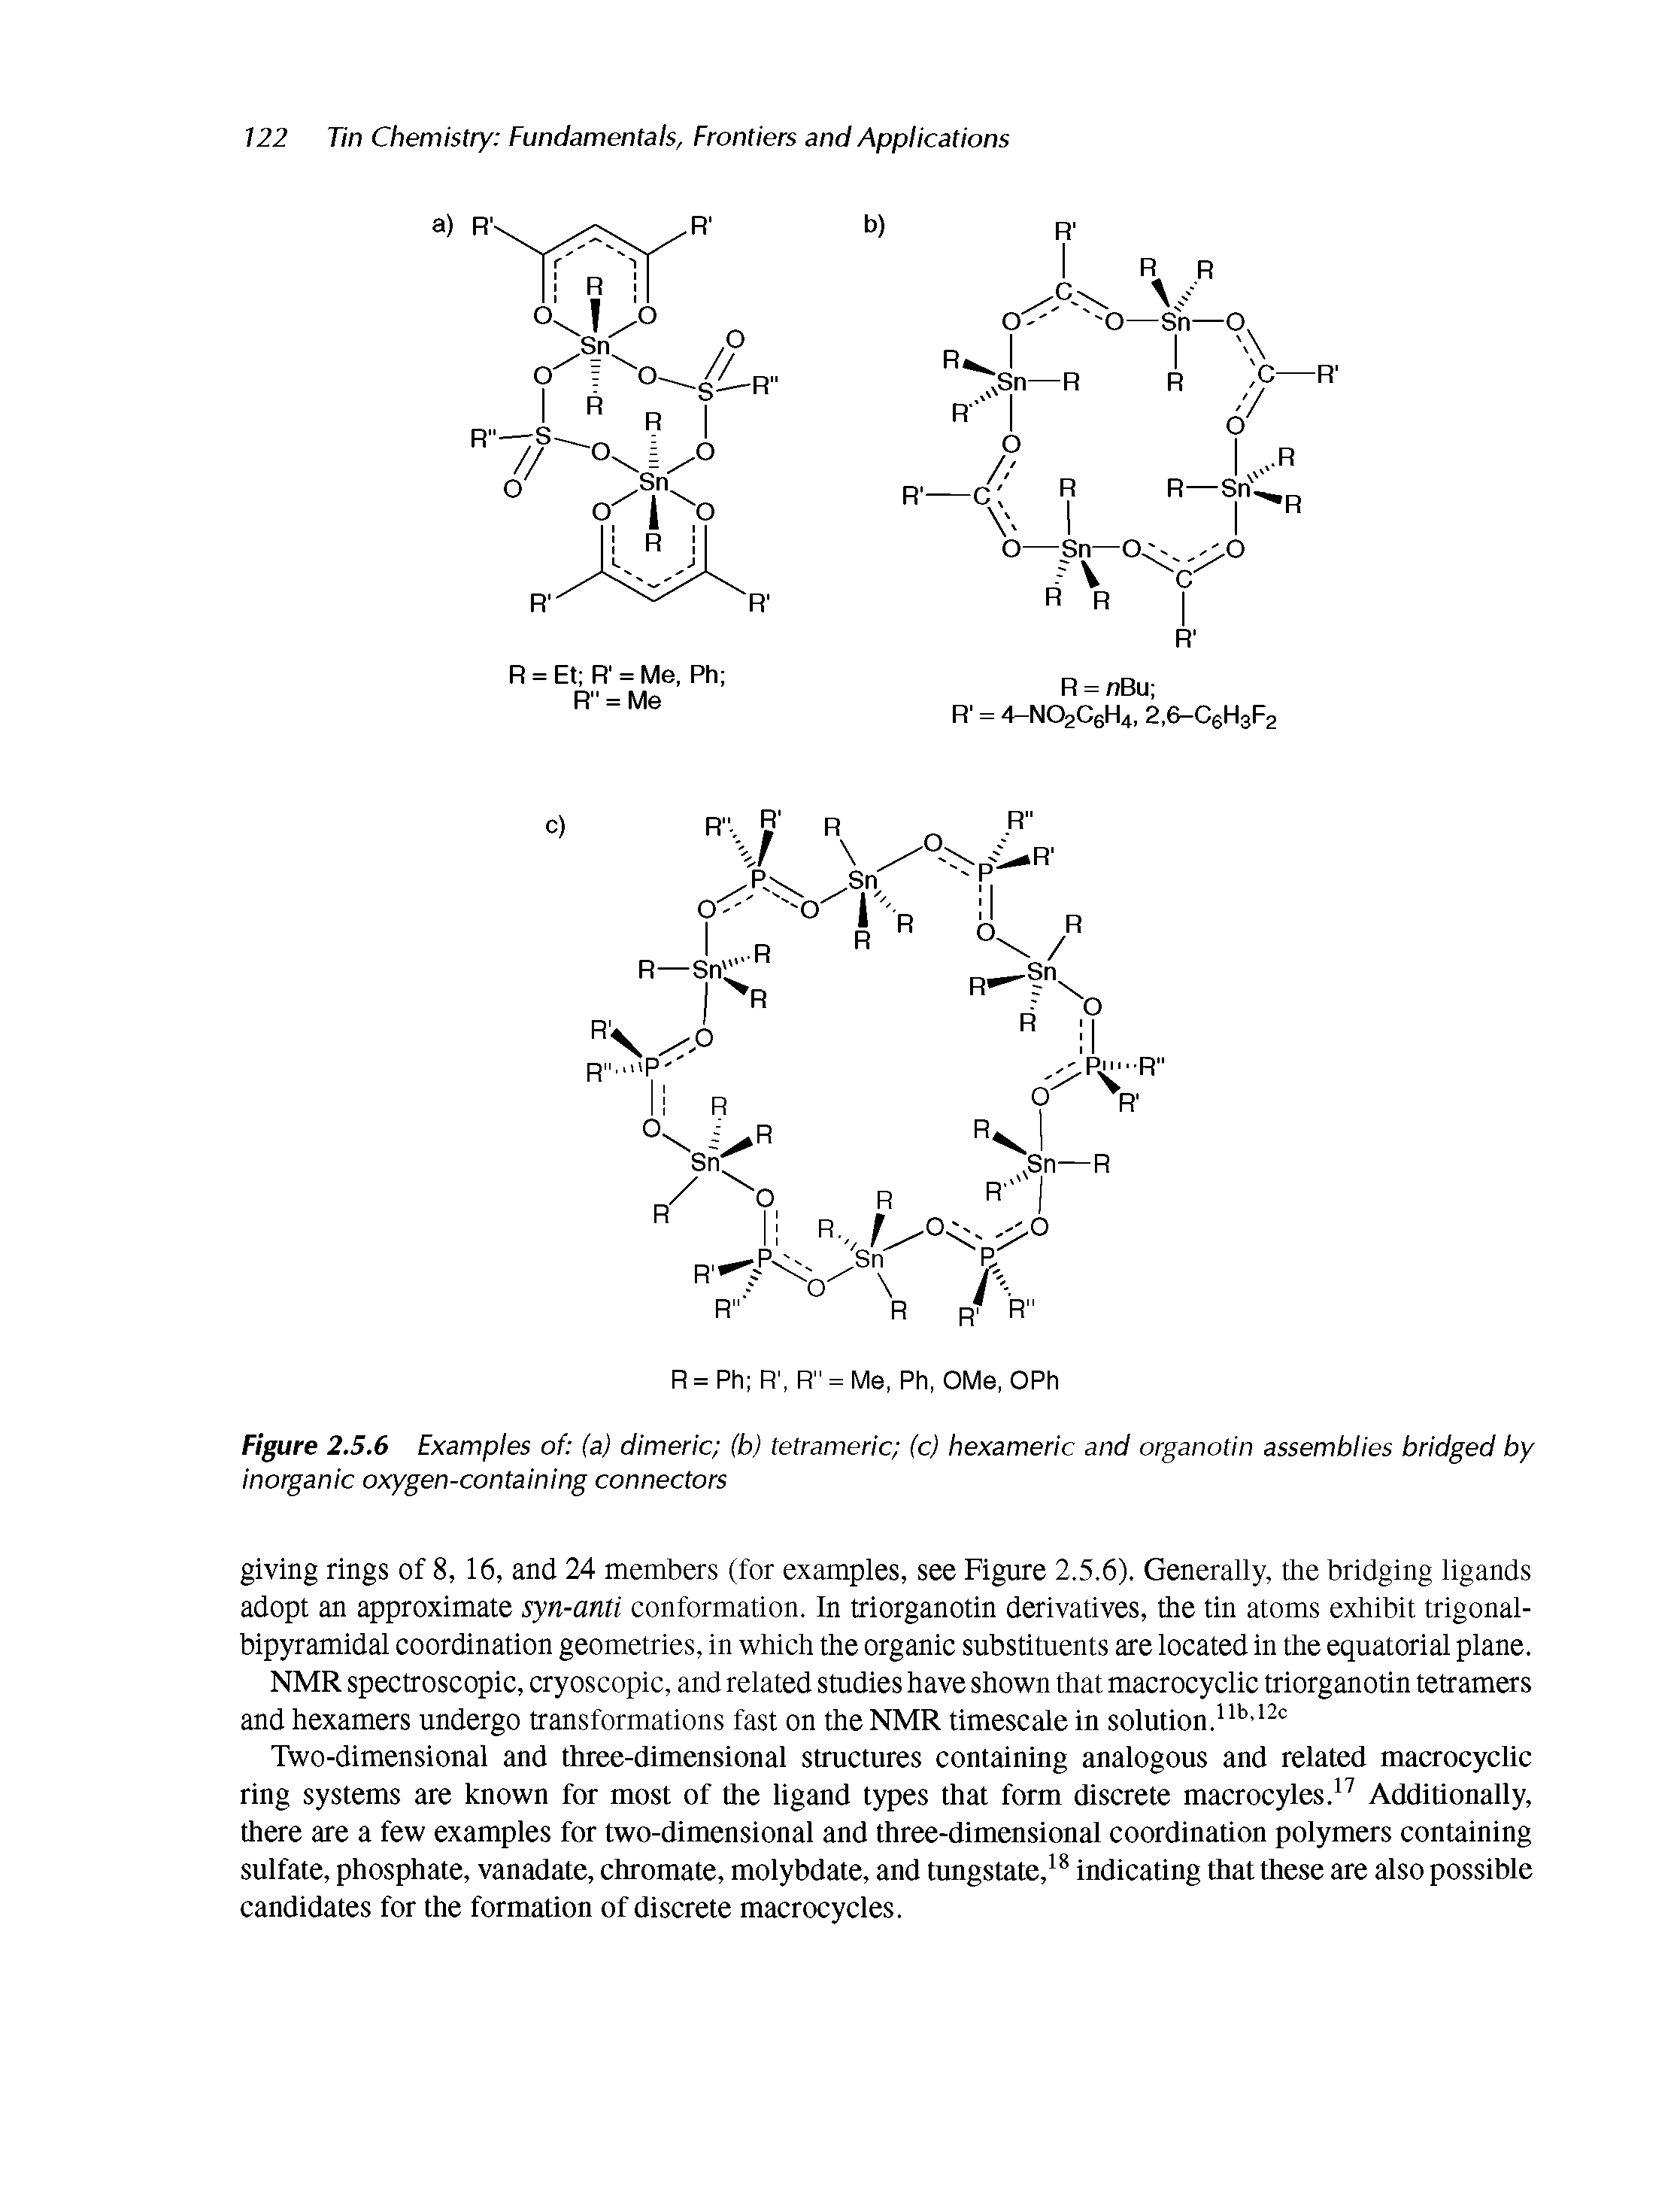 Figure 2.5.6 Examples of (a) dimeric (b) tetrameric (c) hexameric and organotin assemblies bridged by inorganic oxygen-containing connectors...